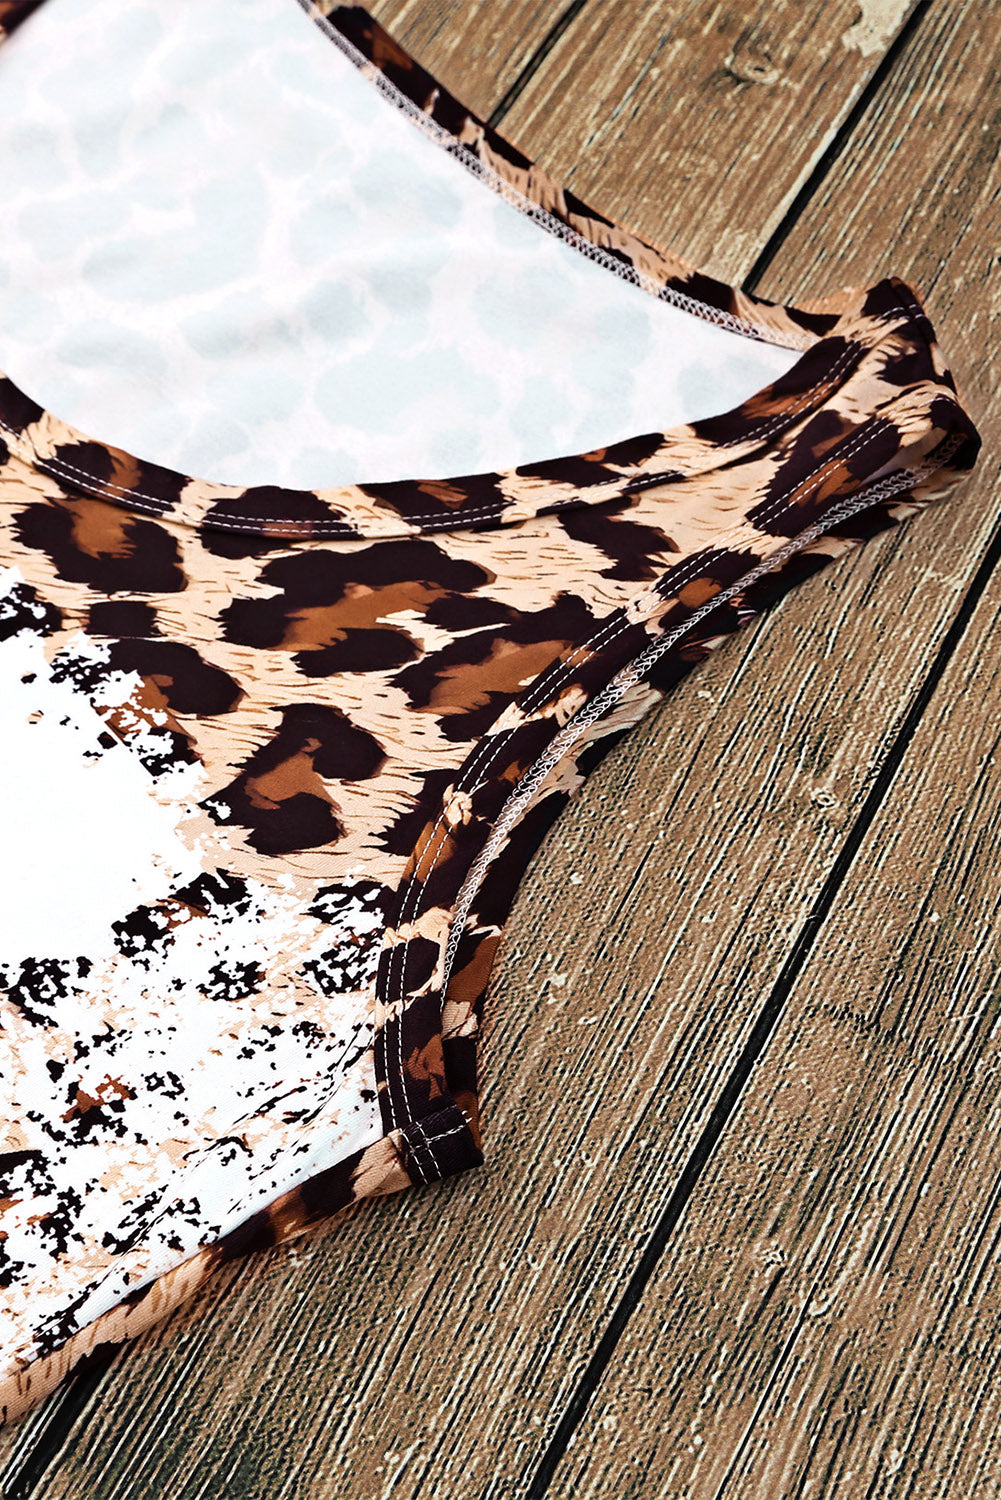 Canotta con grafica bianca sbiancata leopardata